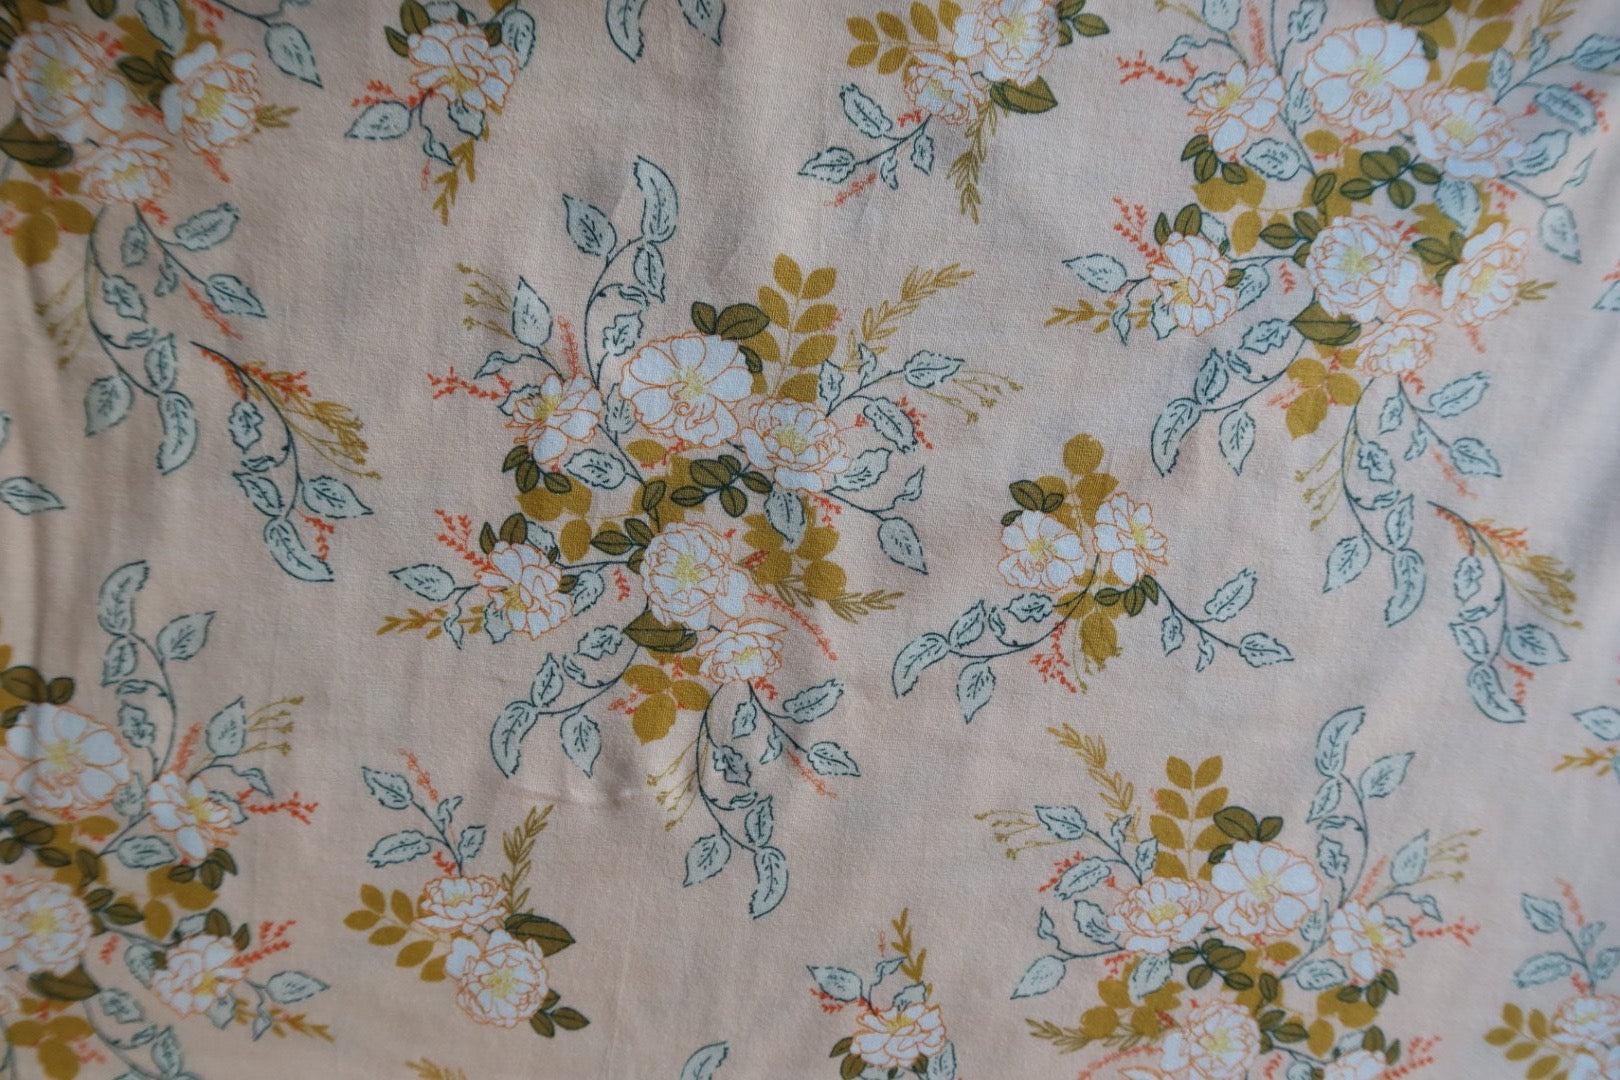 Art Gallery Fabrics - Elisa’s Secret Garden in Knit From Her & History